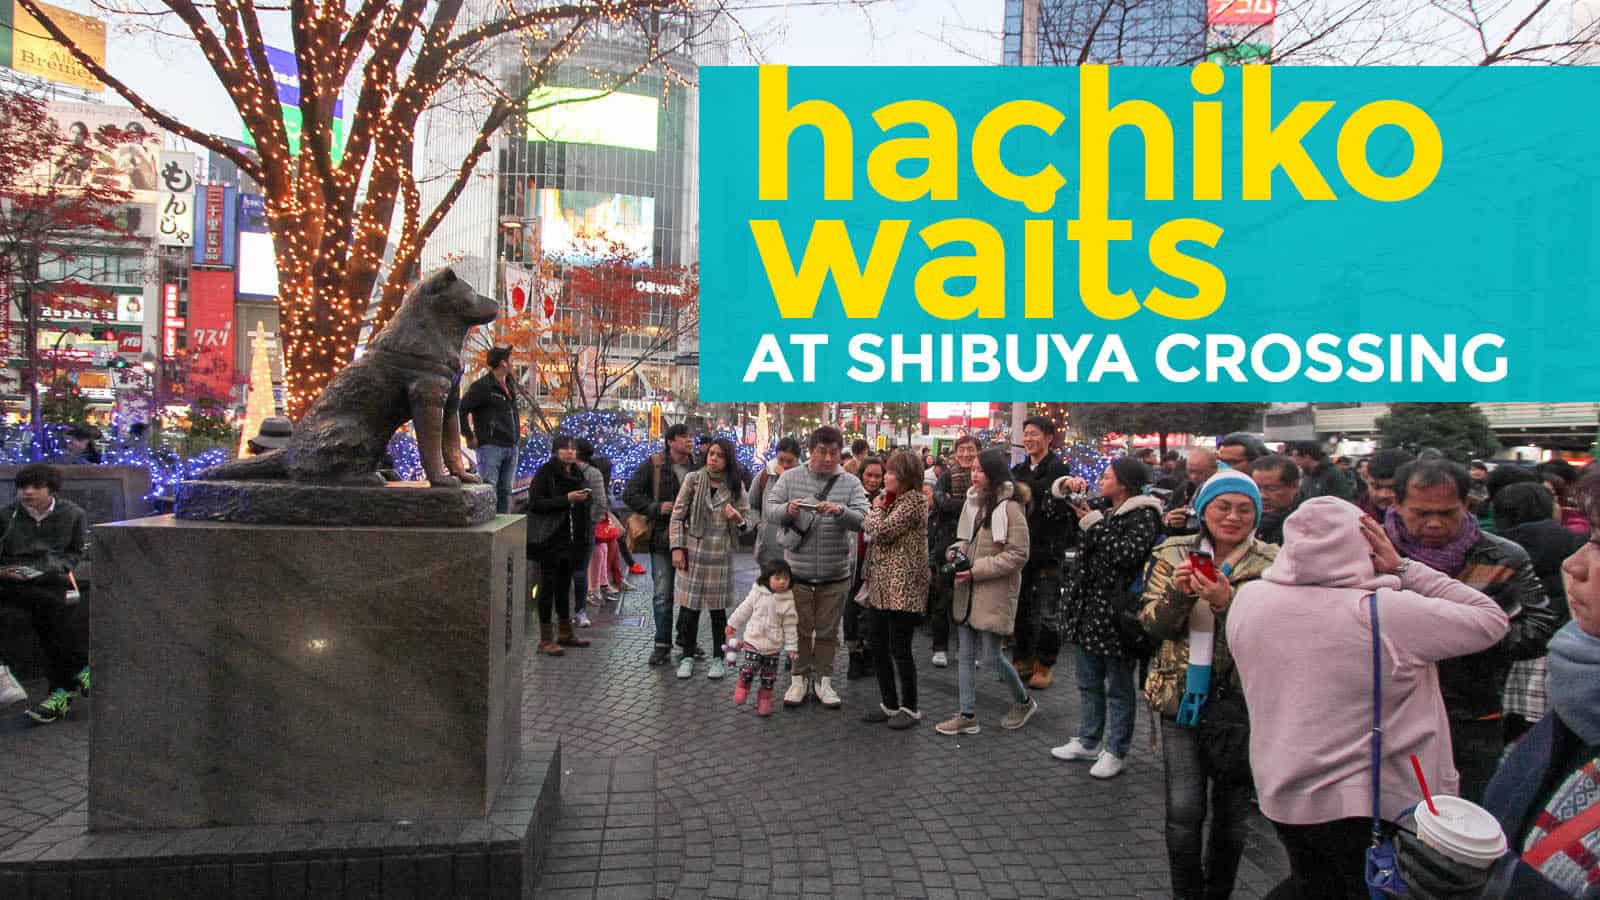 HACHIKO WAITS: The ‘Faithful Dog’ at Shibuya Crossing – Tokyo, Japan